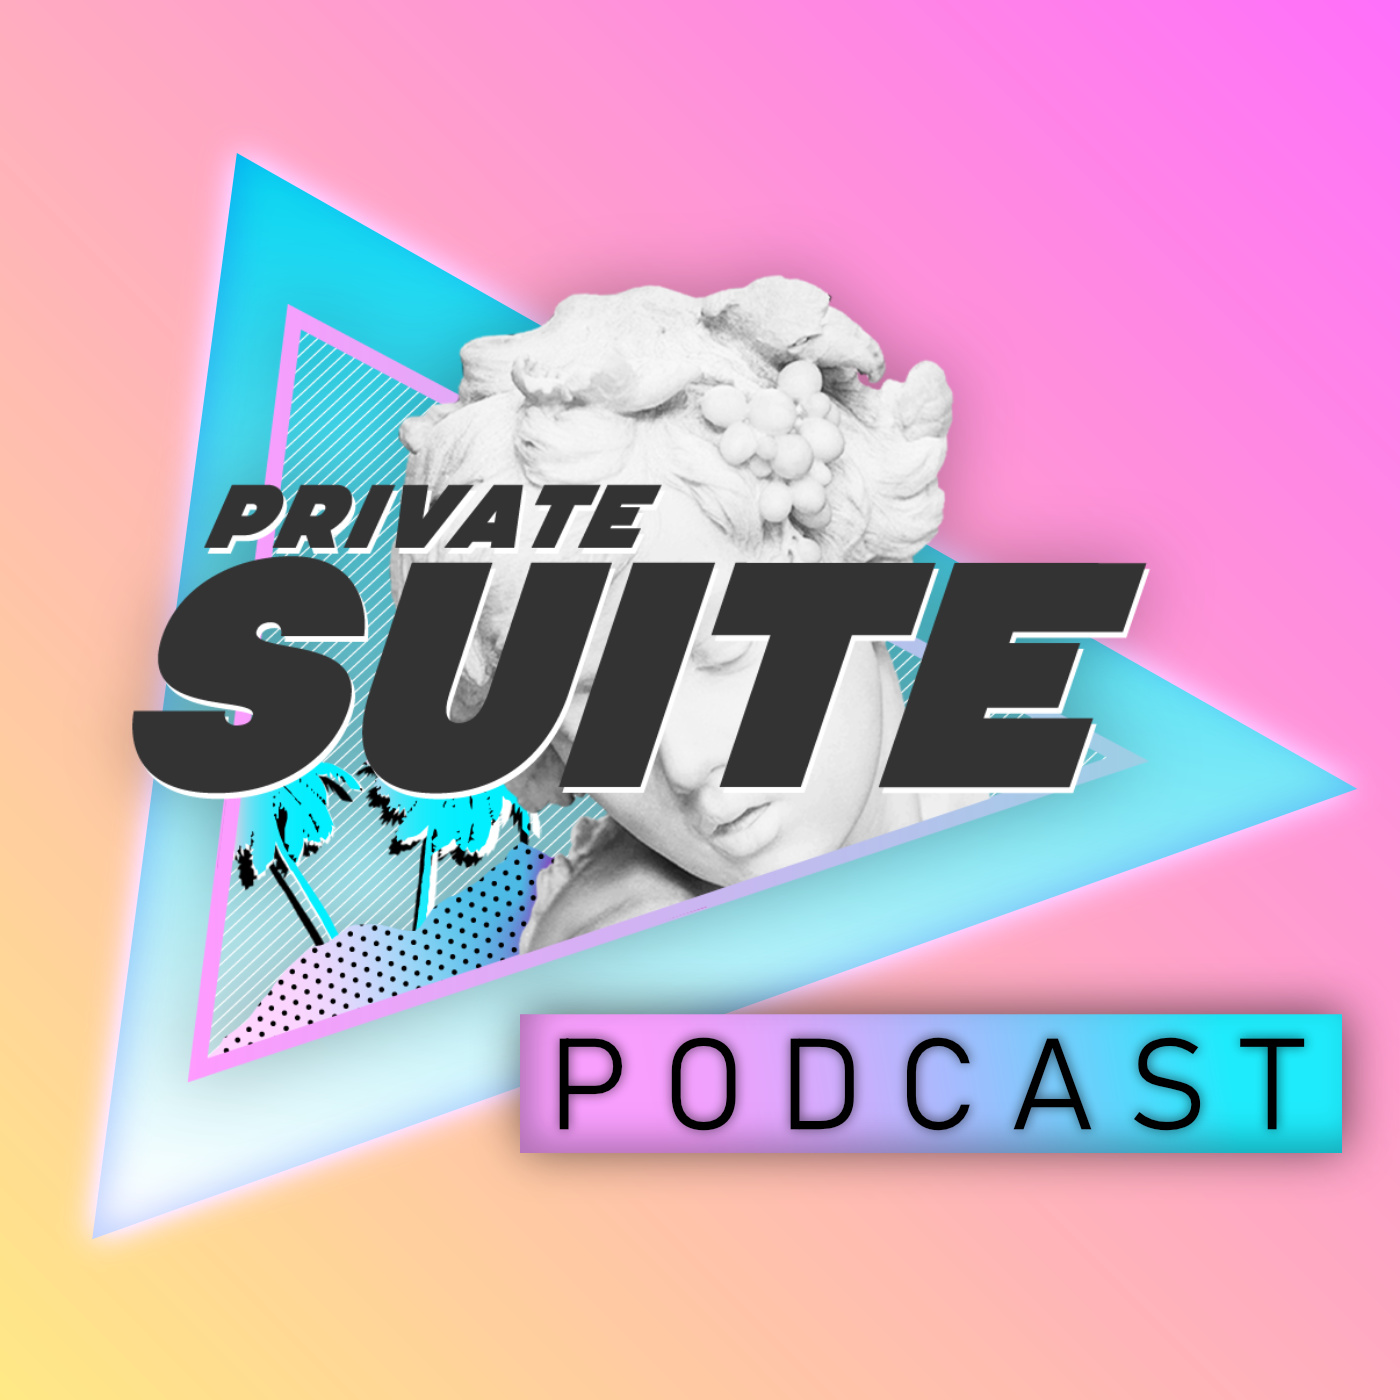 Private Suite Podcast